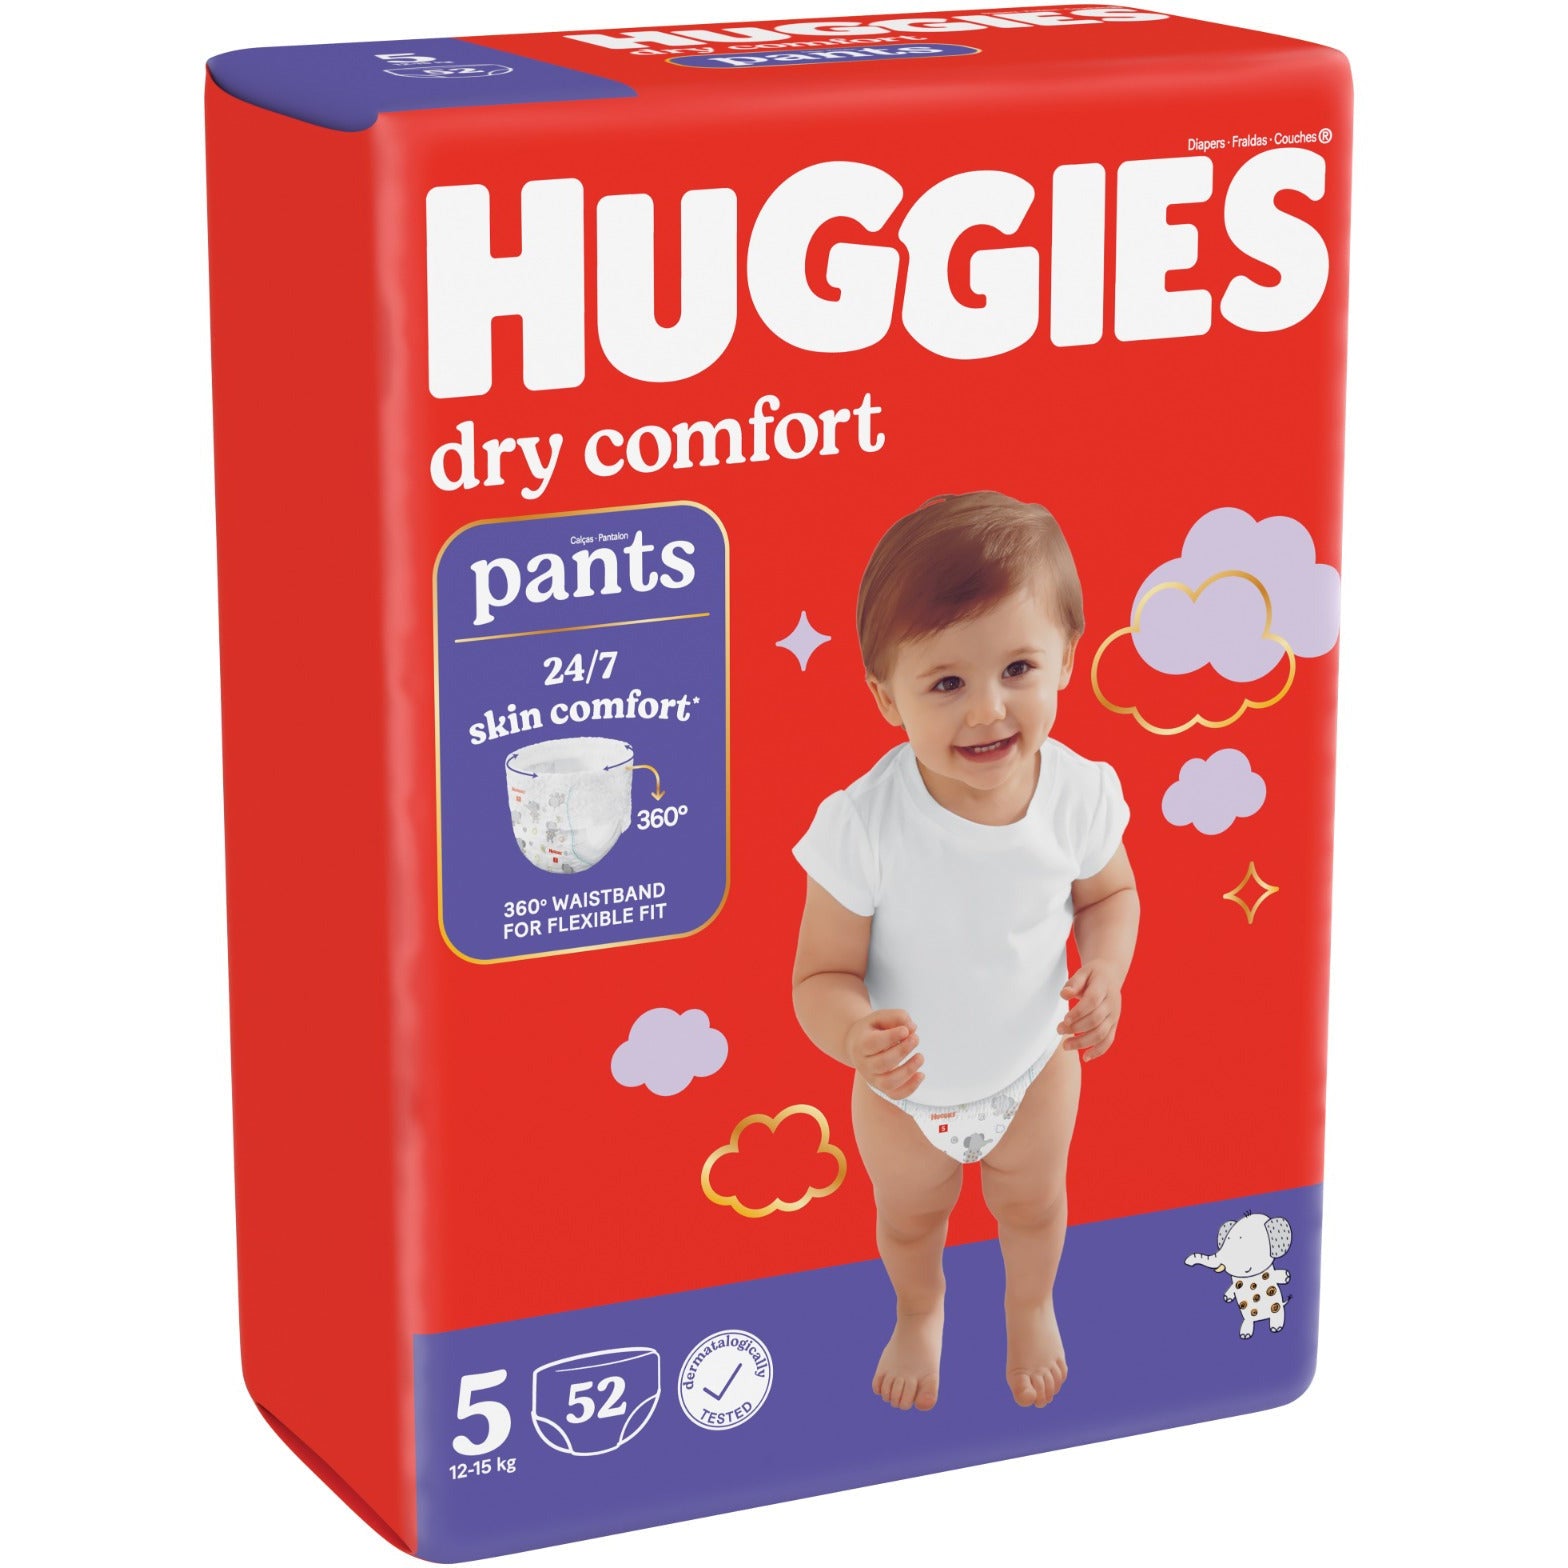 Huggies Dry Comfort Pants Size 4 56 Pack